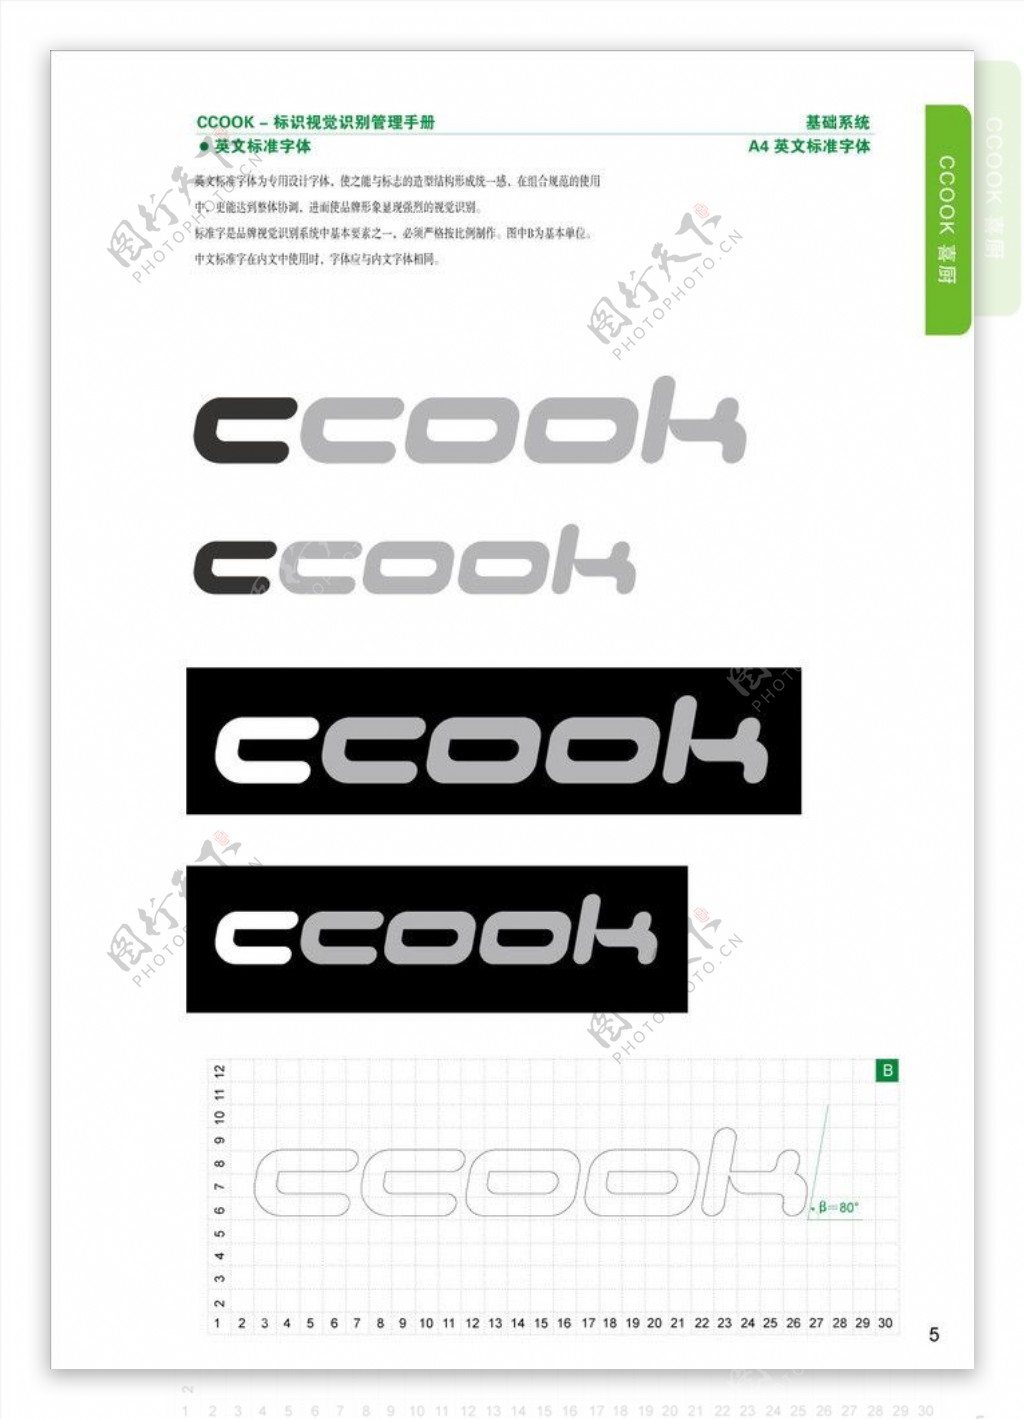 ccook标识英文标准字图片